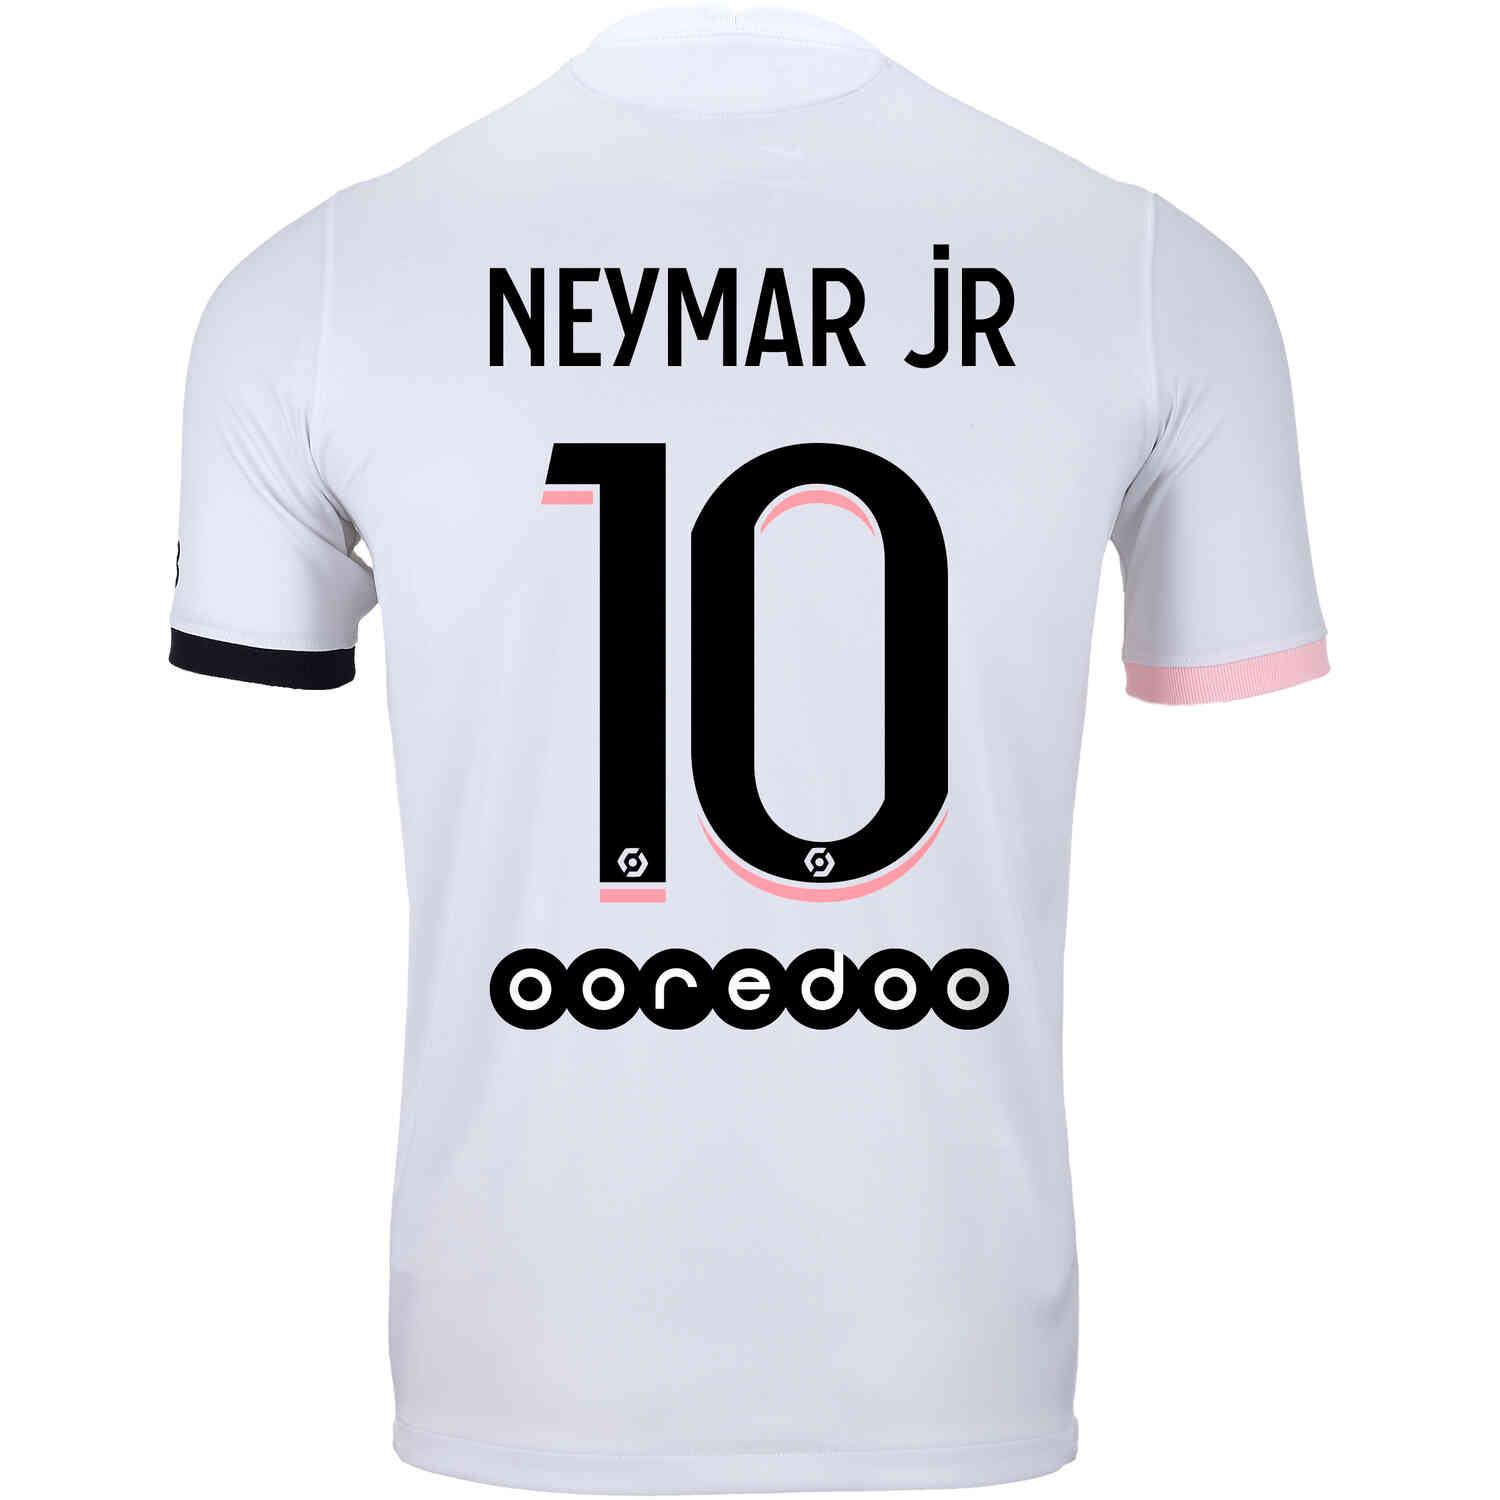 neymar jr football jersey